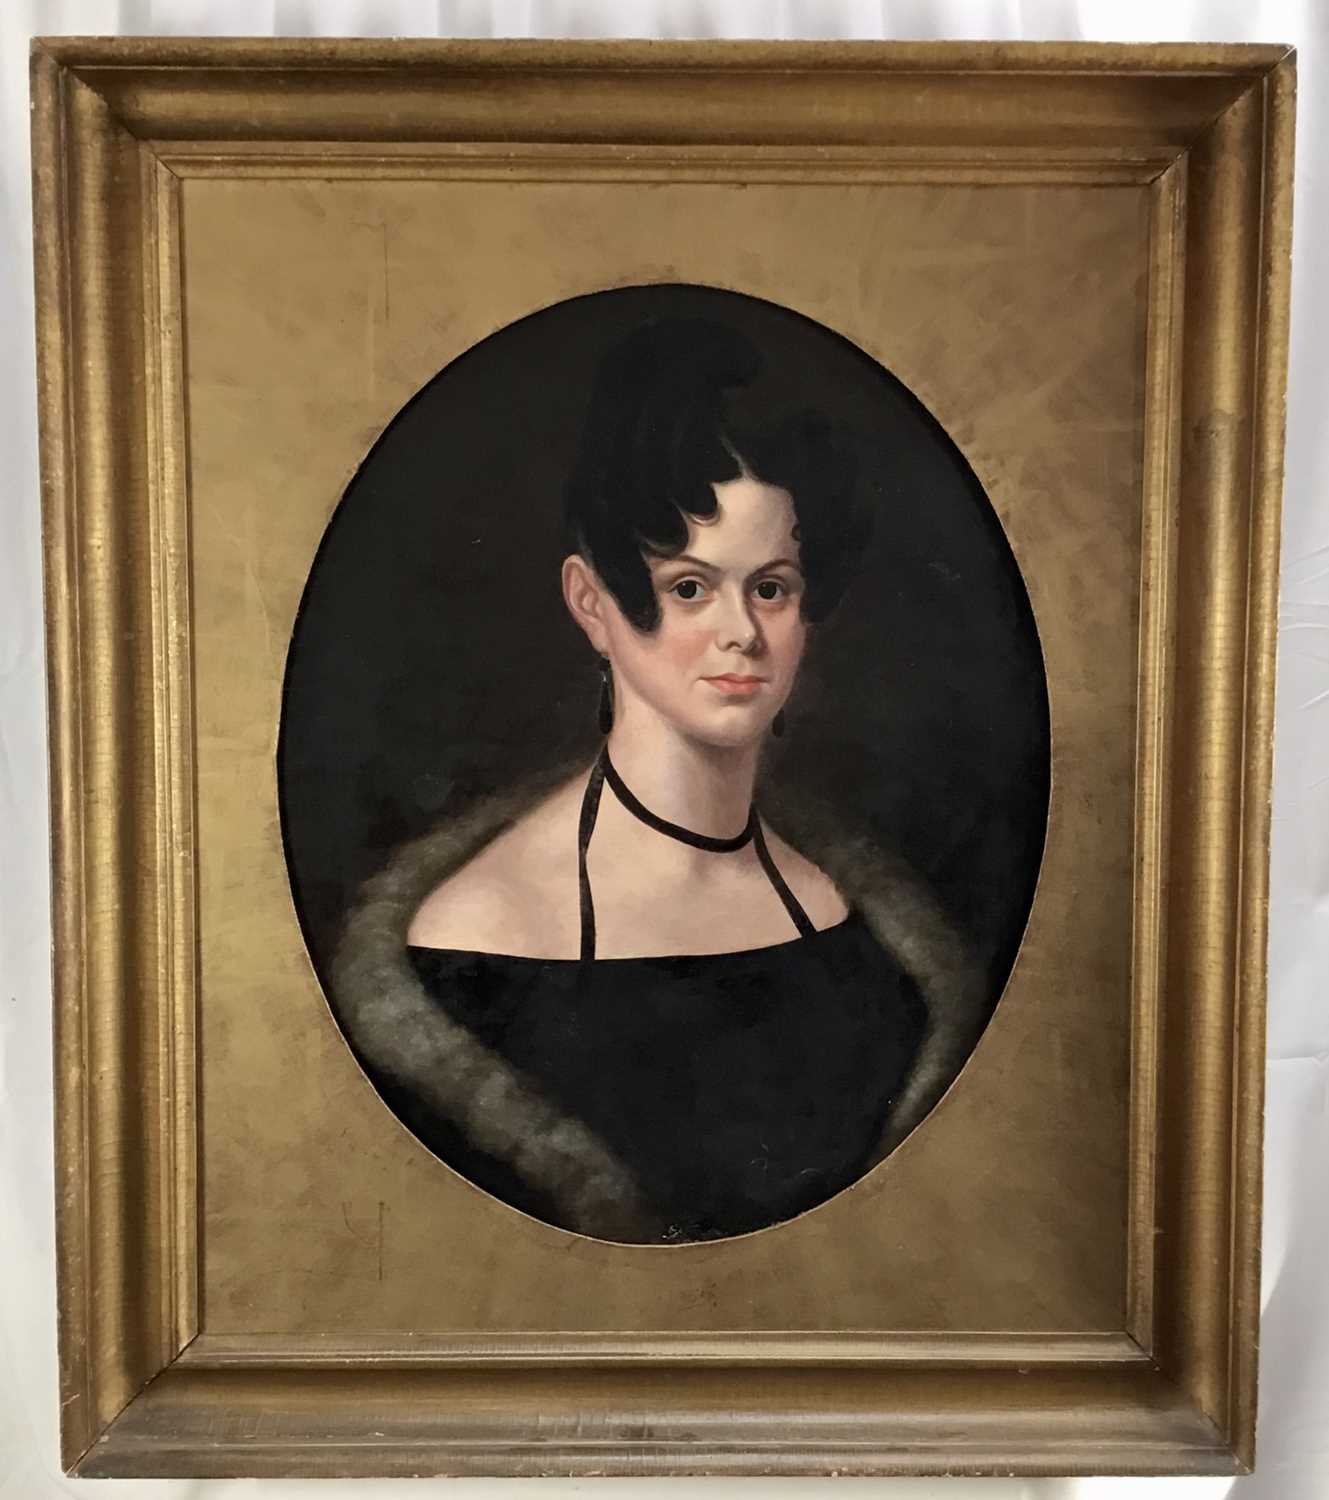 Lot 44 - Continental School, 19th century, oil on canvas - portrait of a stylish lady, 62cm x 49cm, oval, in gilt frame